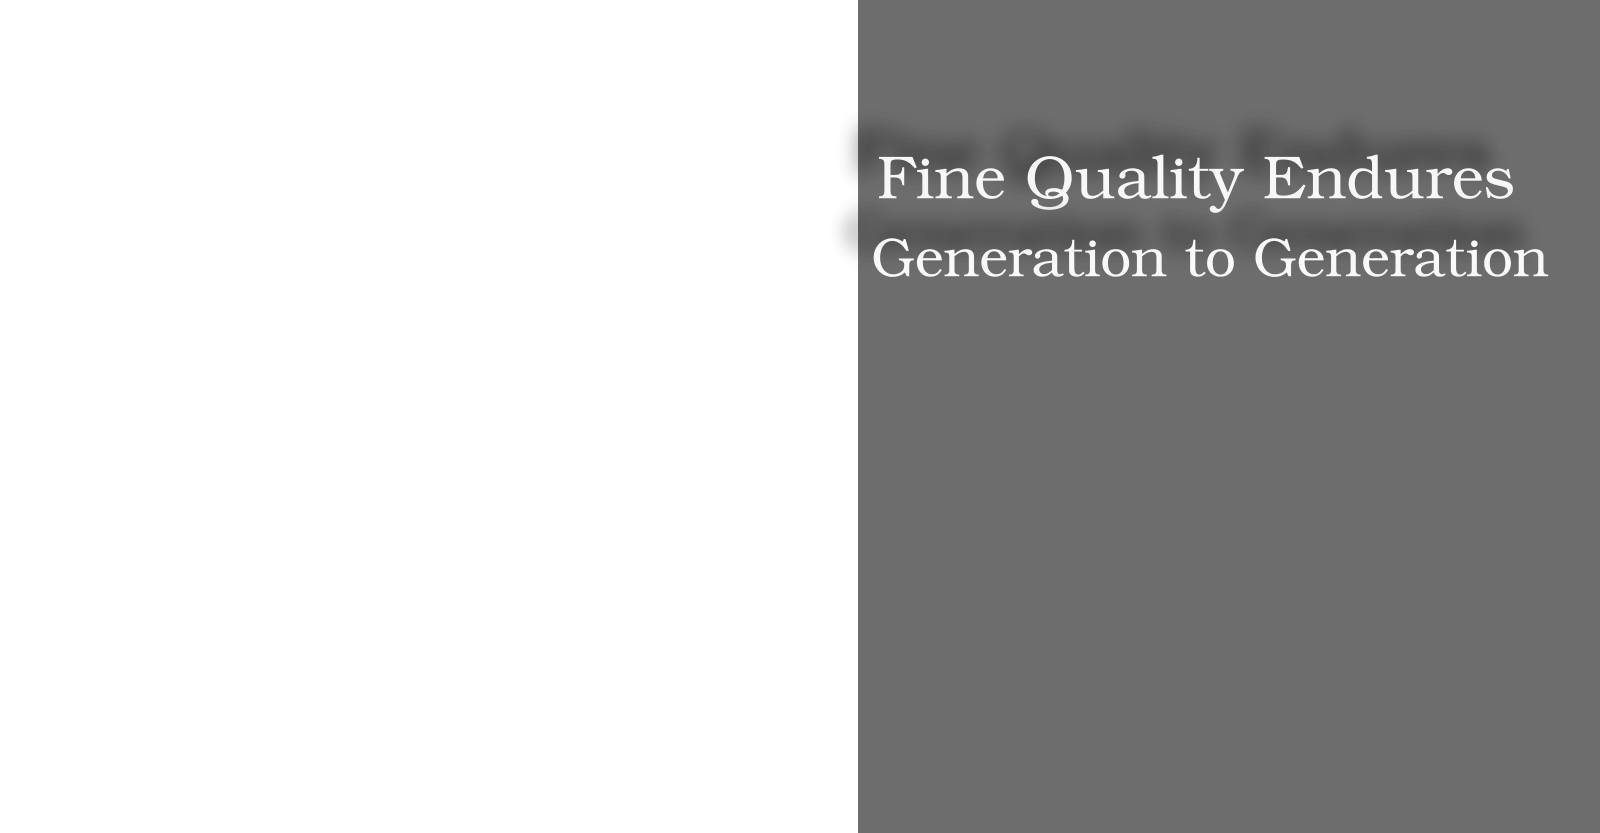 Fine Quality Endures Generation to Generation